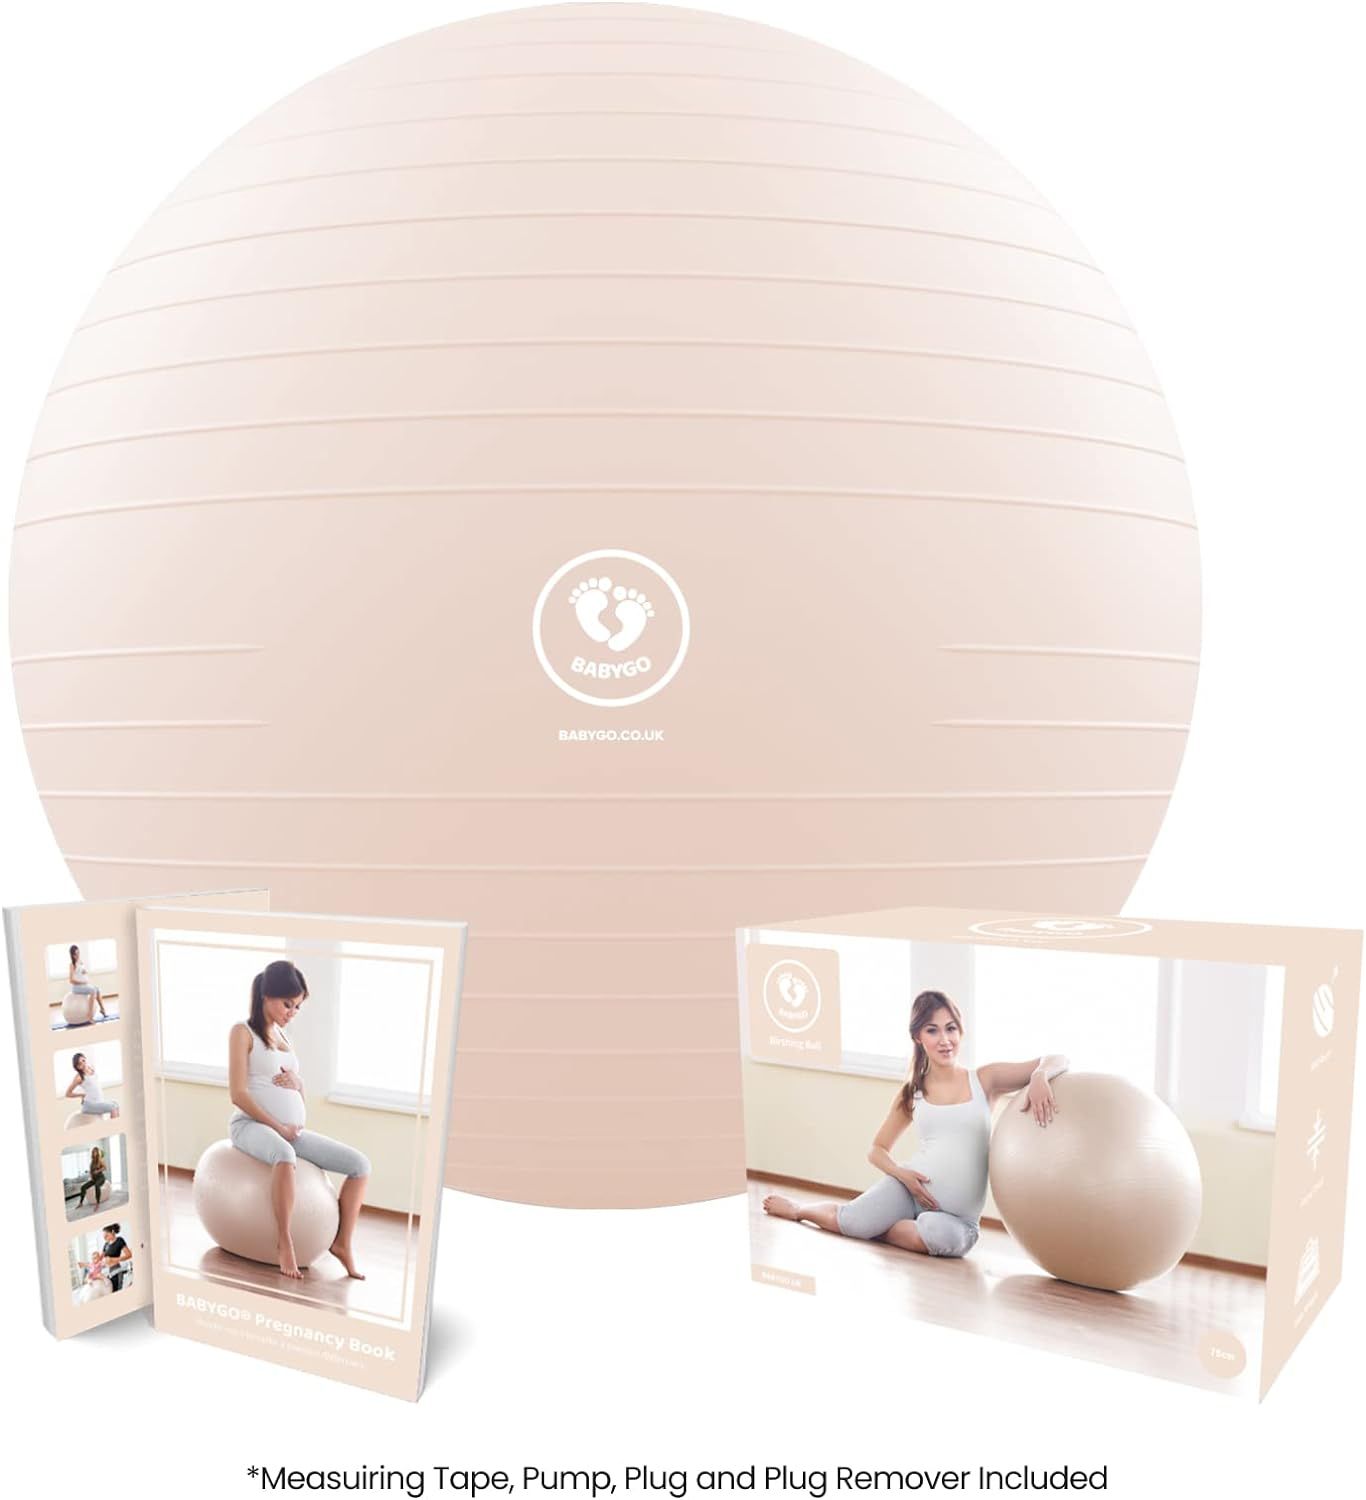 BABYGO Birthing Ball - Pregnancy Yoga Labor & Exercise Ball & Book Set Trimester Targeting, Mater... | Amazon (US)